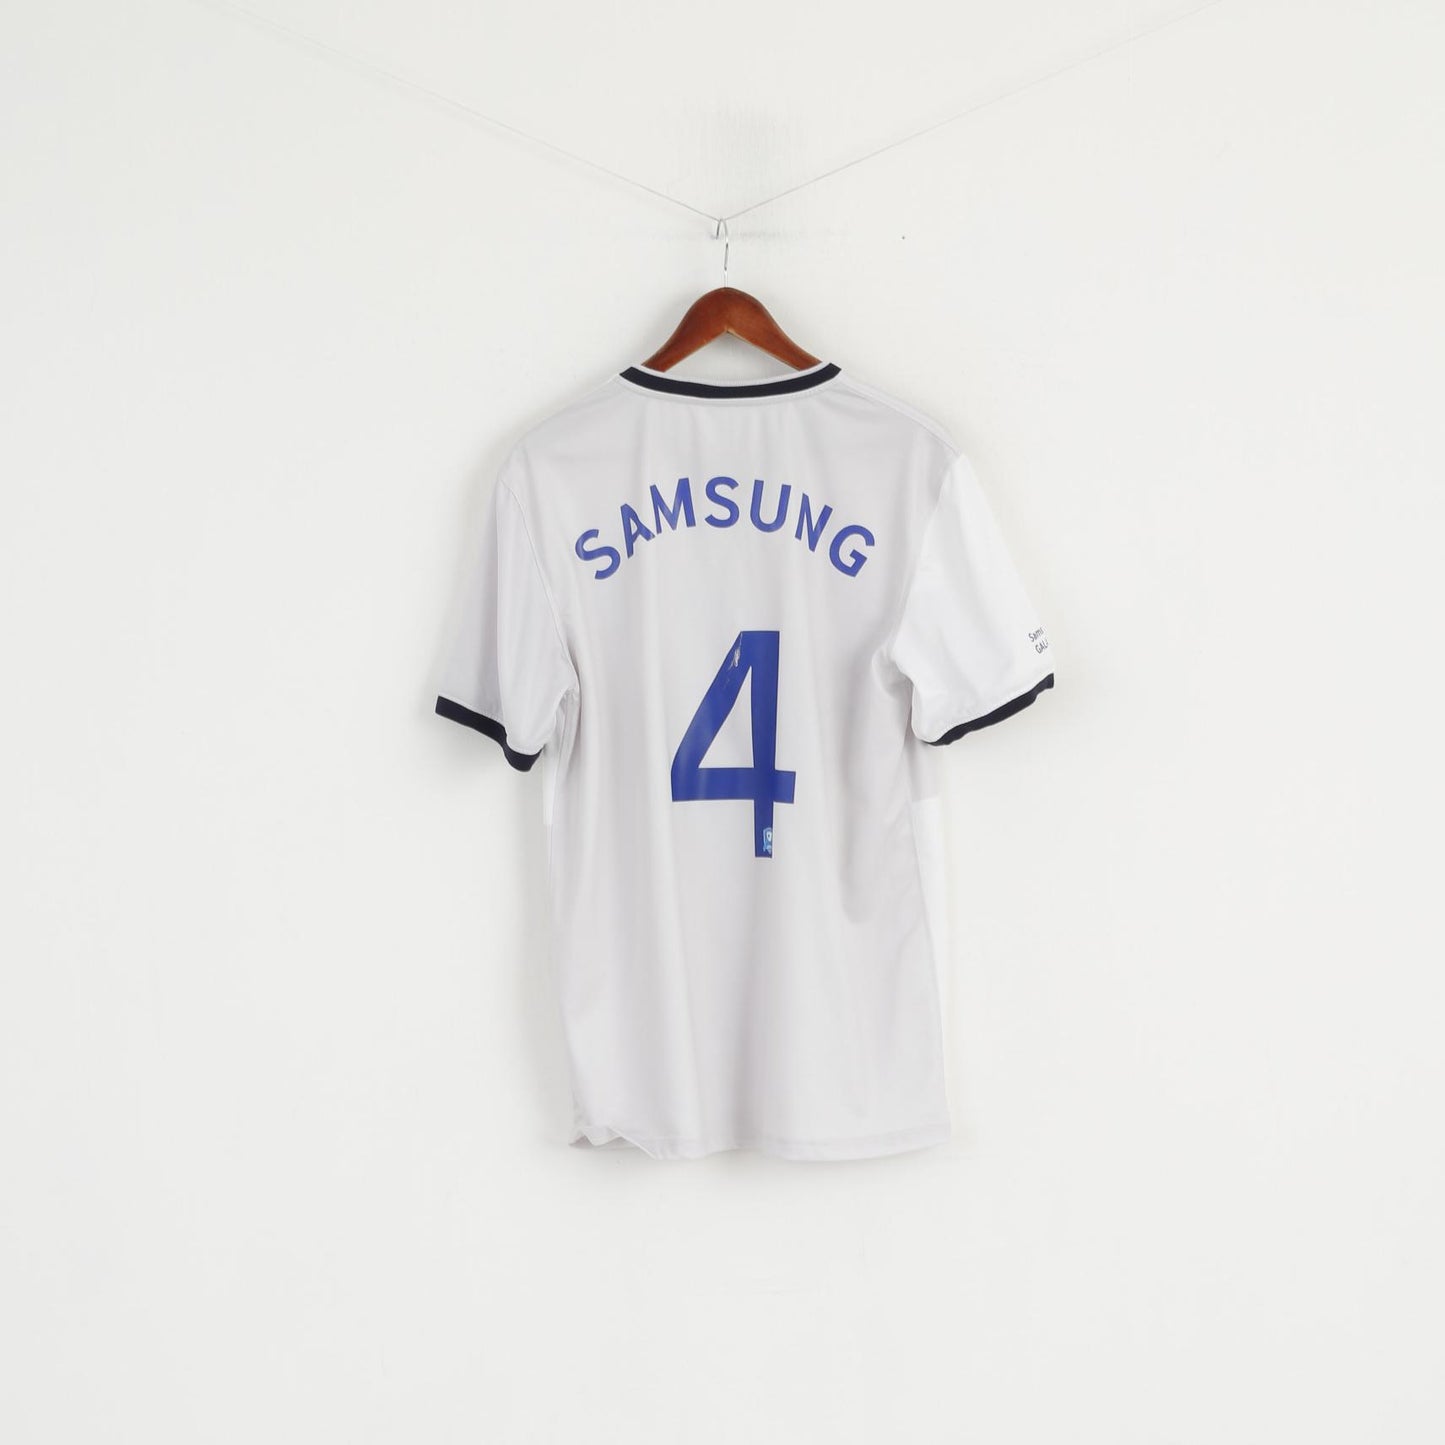 Maglia Samsung da uomo M bianca lucida Samsung Galaxy Cup 2015 Sport Jersey Top